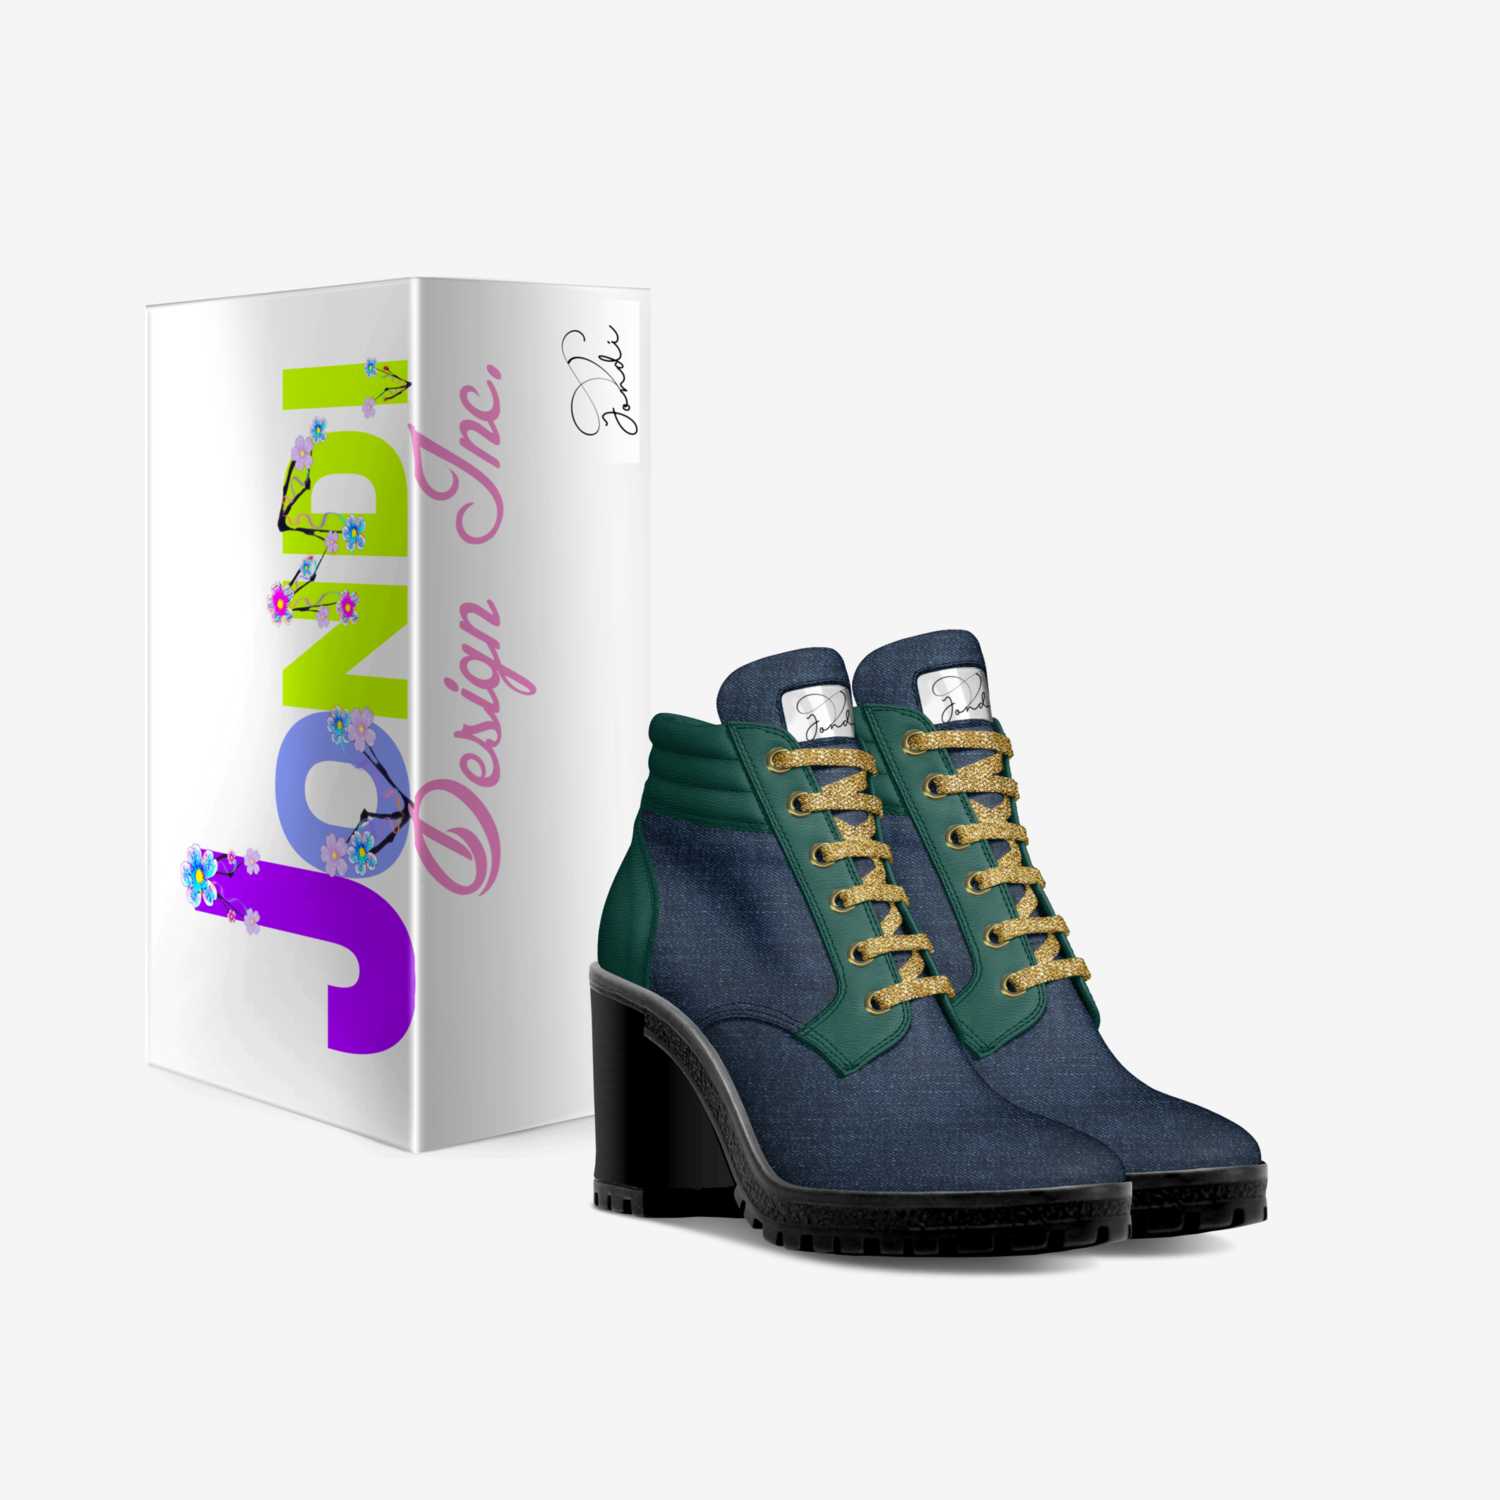 Jondi custom made in Italy shoes by Jonnika Allen | Box view